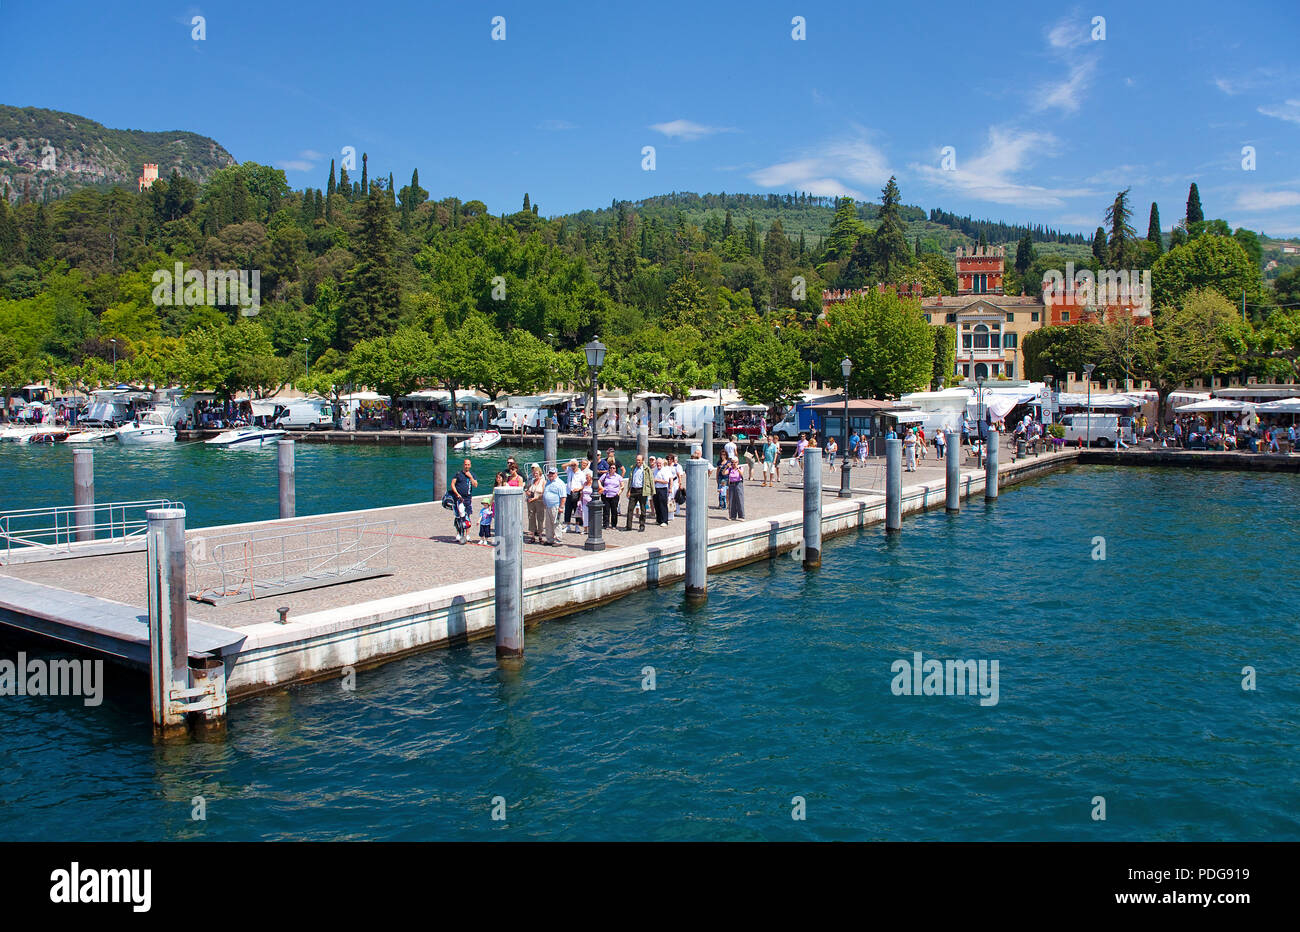 Pier at Villa Albertini, palace of the 16. century, neo-classical architecture, Garda, province Verona, Lake Garda, Italy Stock Photo